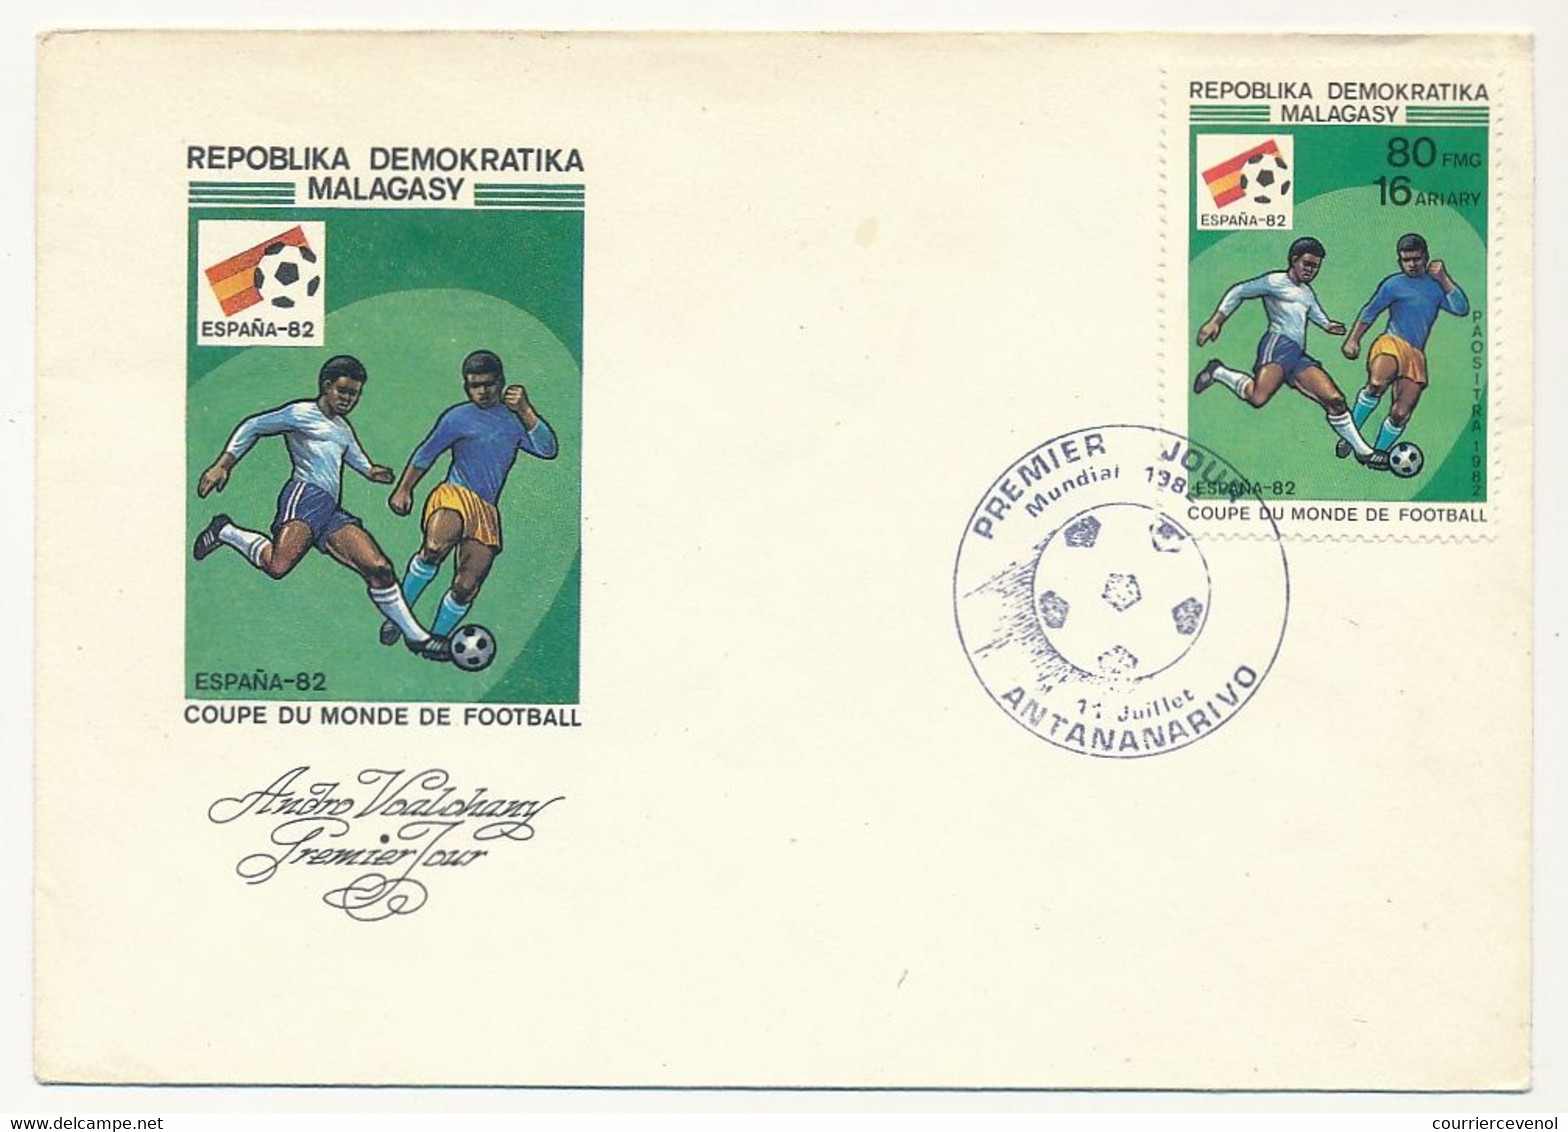 MADAGASCAR - 1 Env. FDC - Coupe Du Monde De Foot-ball - Espana 1982 - Antananarivo 11 Juillet 1982 - Madagaskar (1960-...)